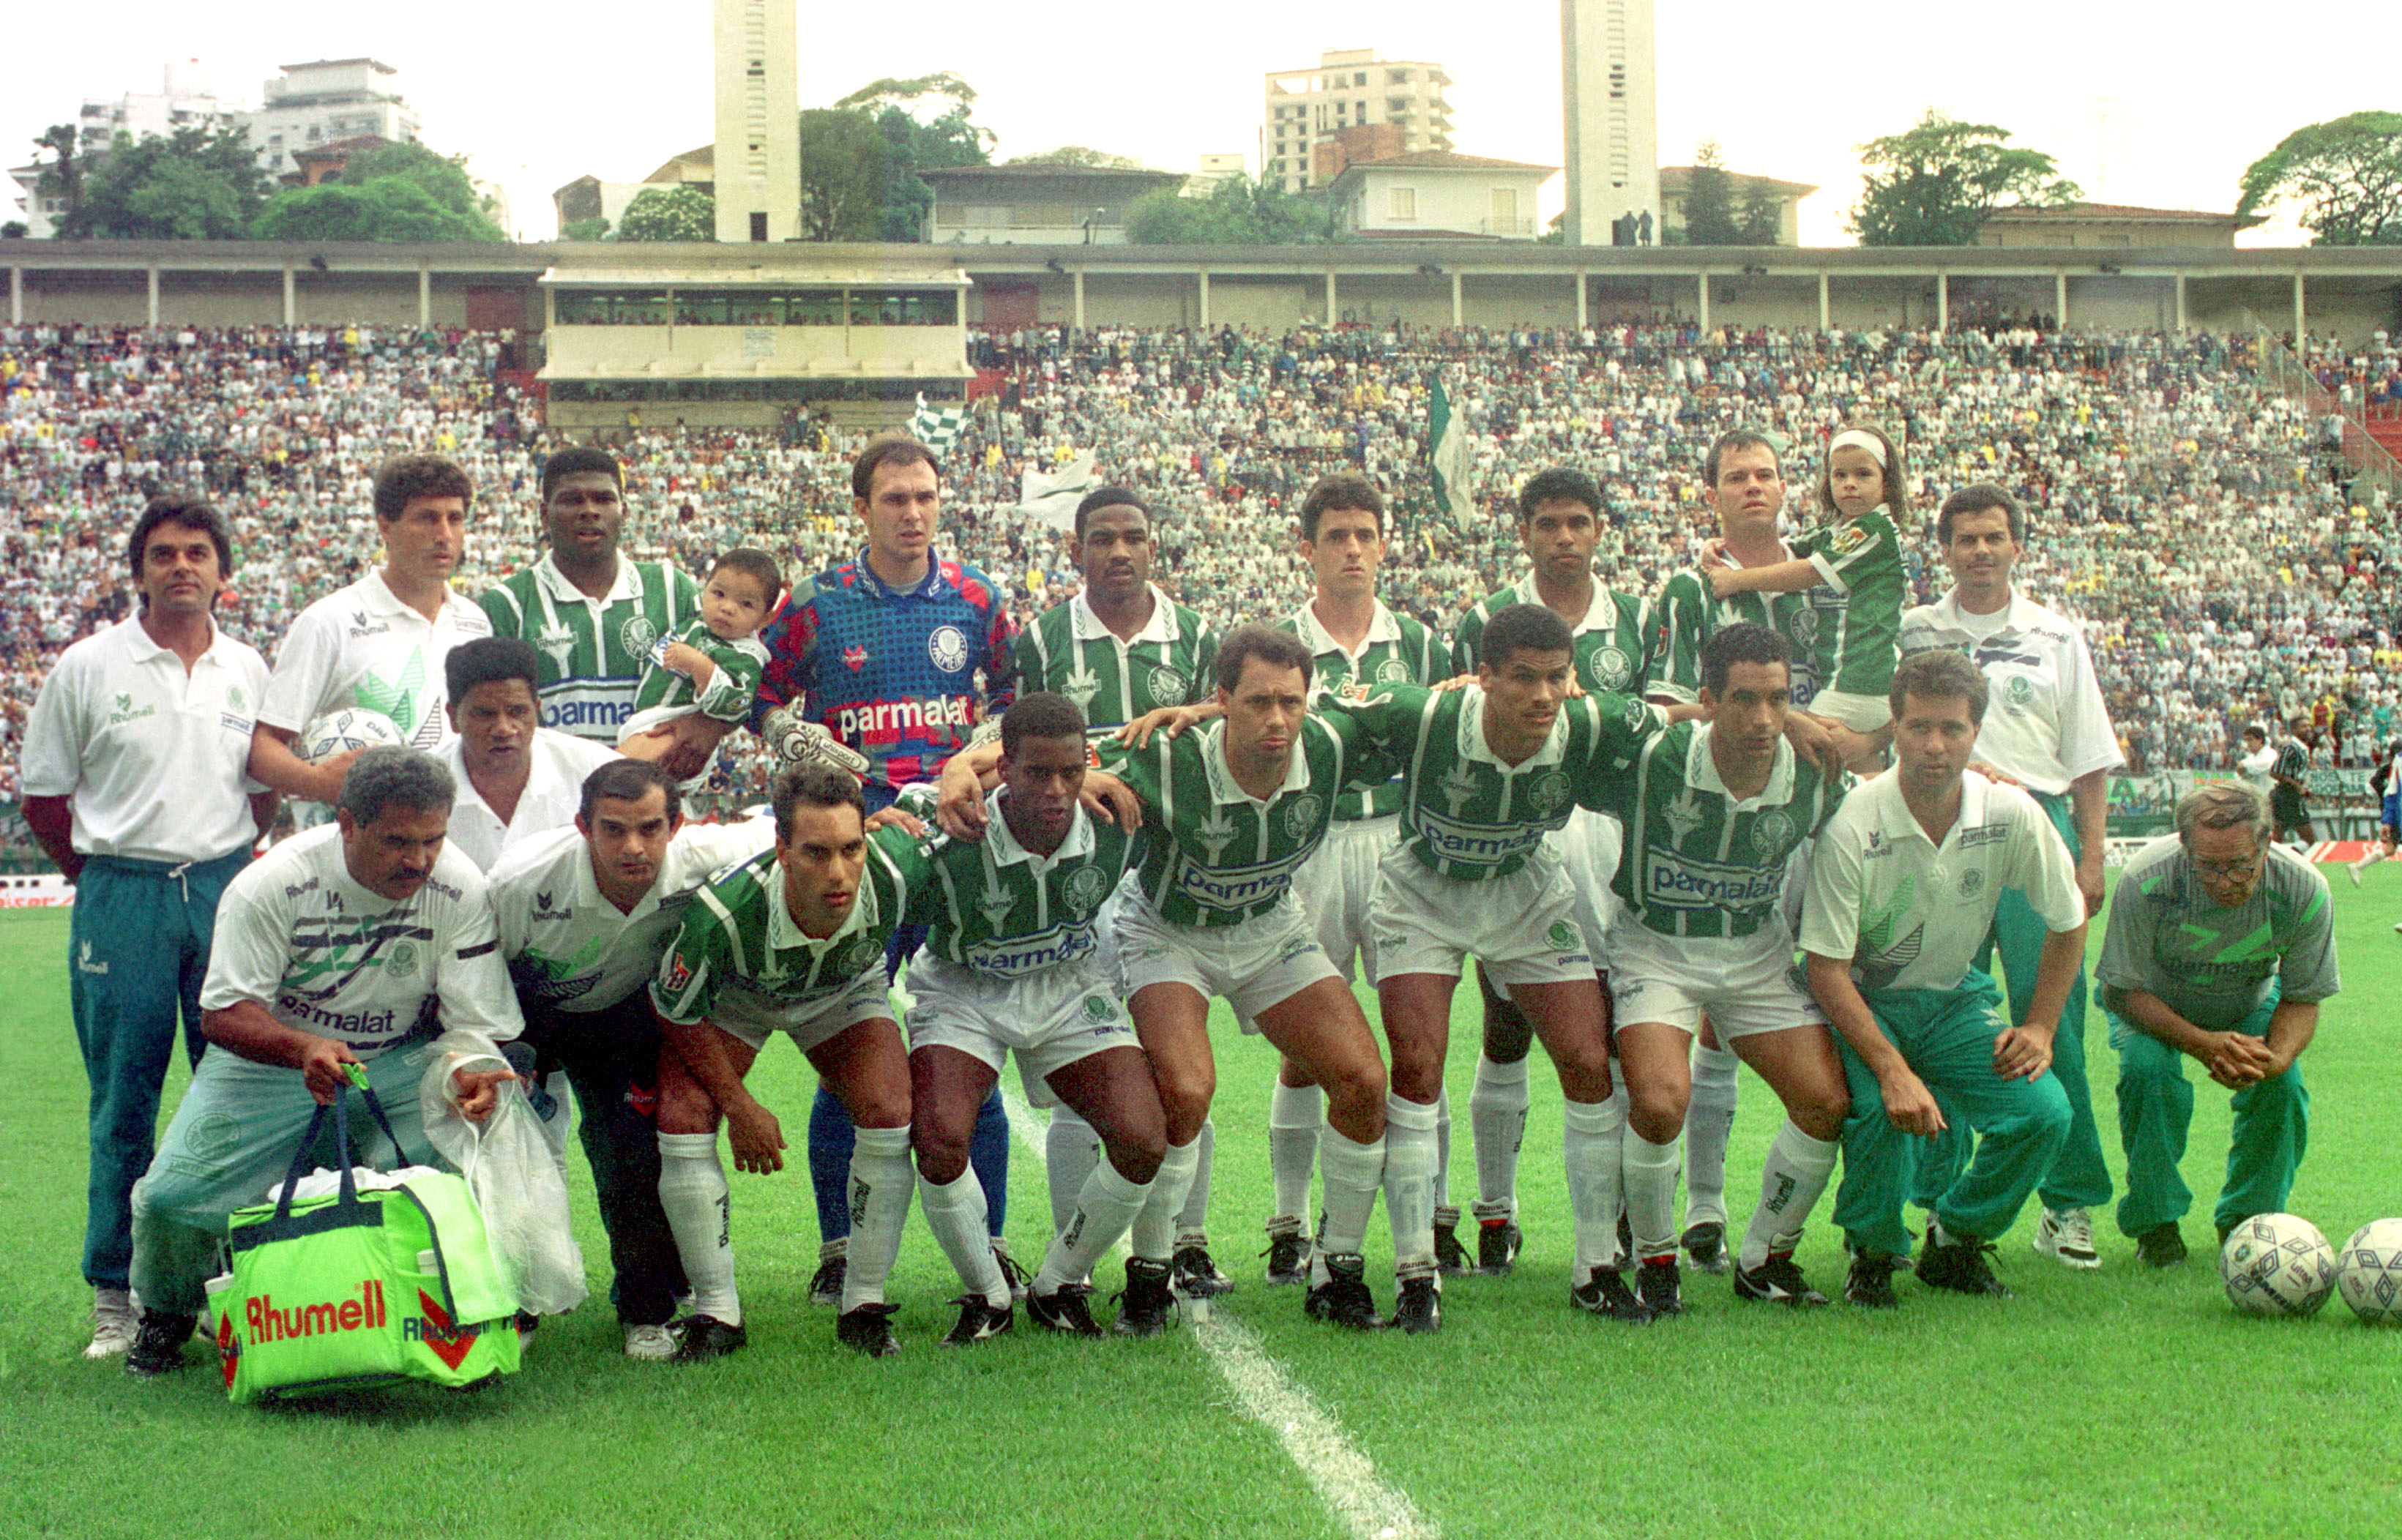 Grêmio Barueri Futebol - Wikipedia